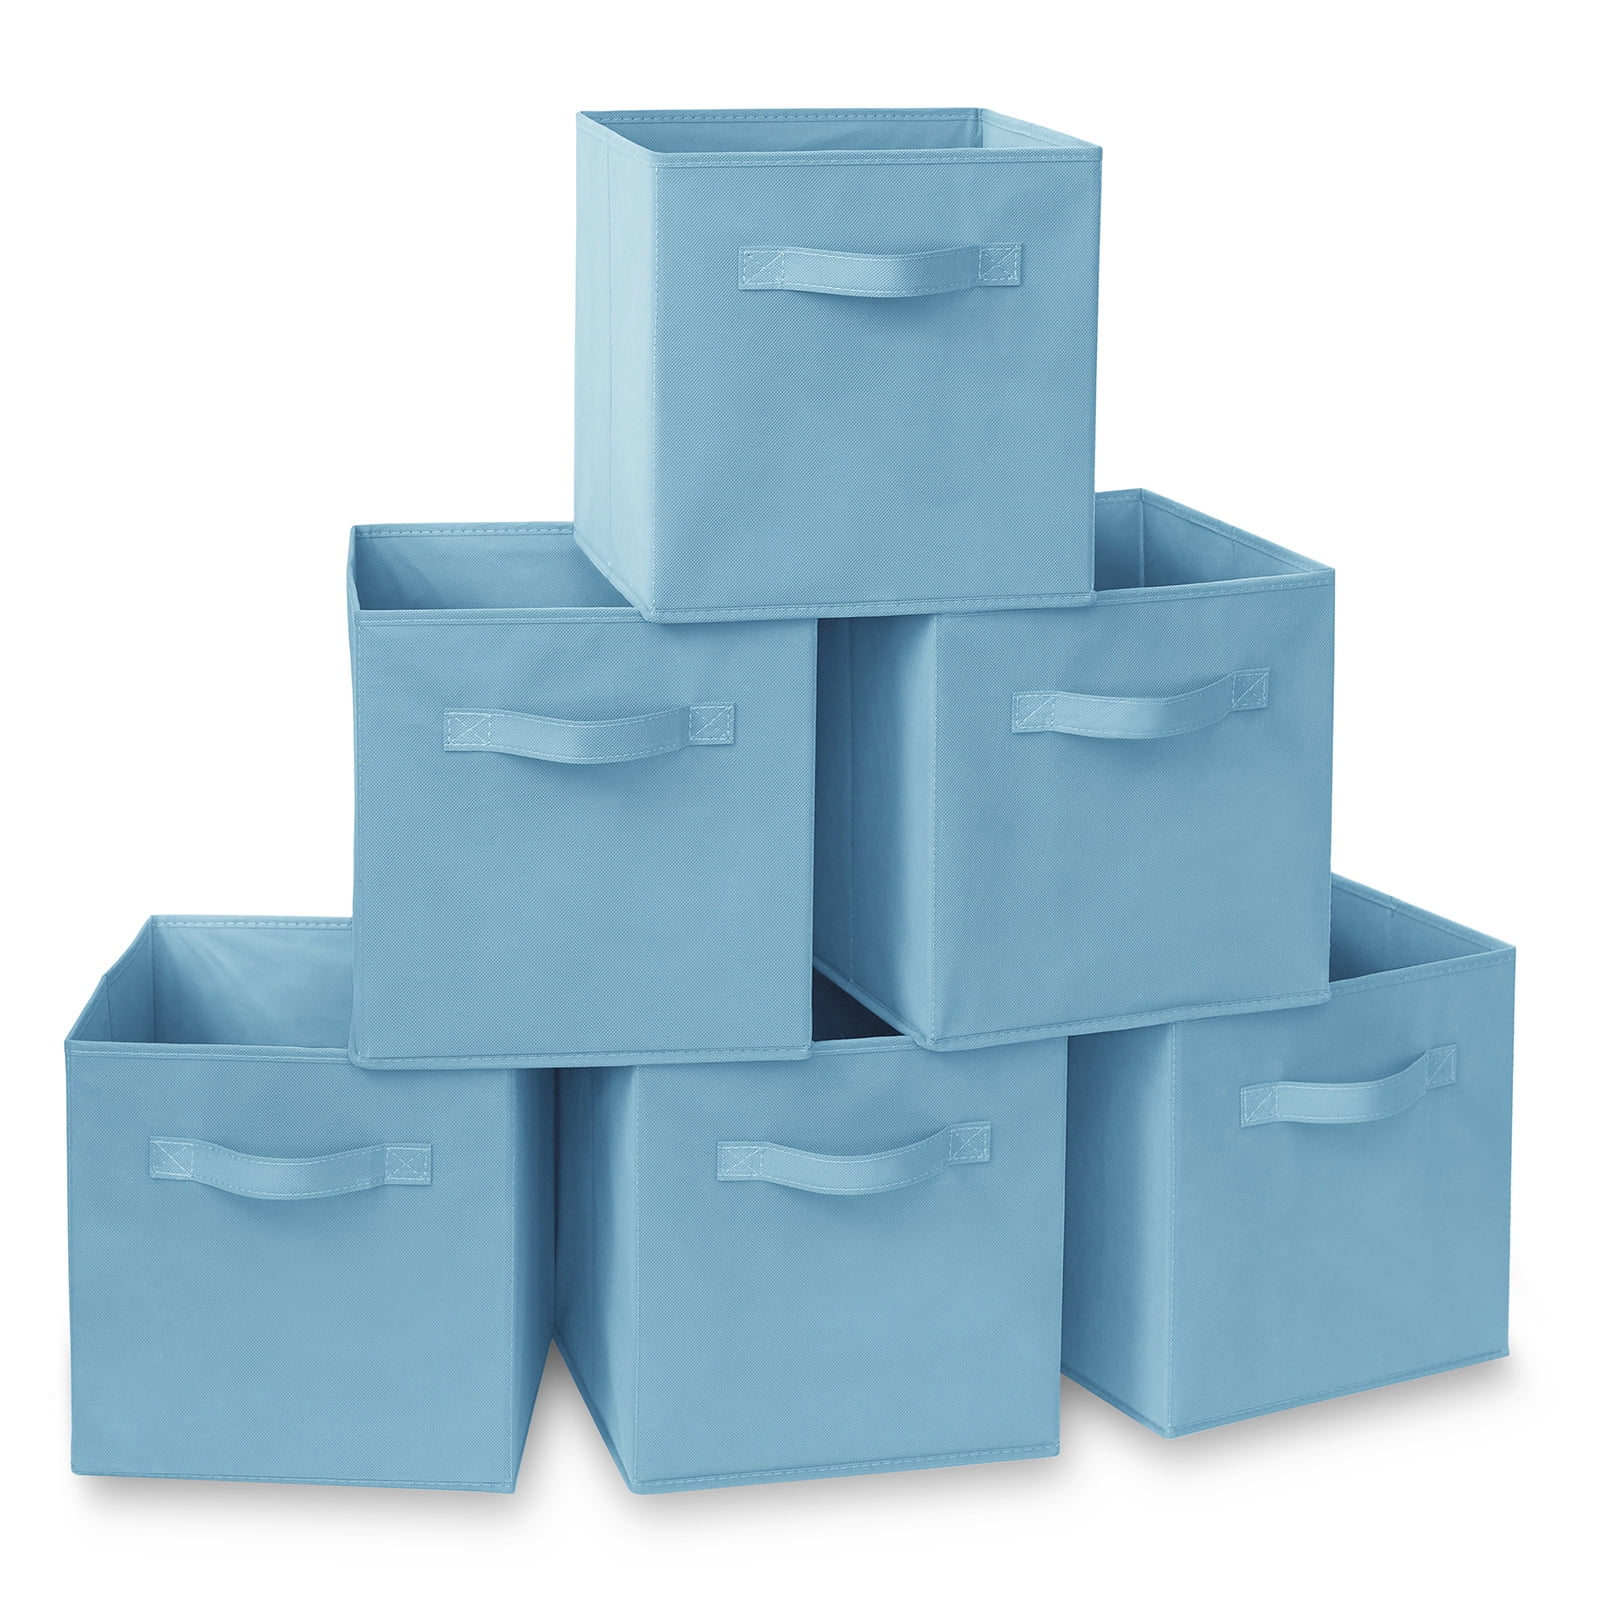 Collapsible Foldable Cube Storage Bins Set of 6 Organizer 11"W x 11"D x 5.25"H 